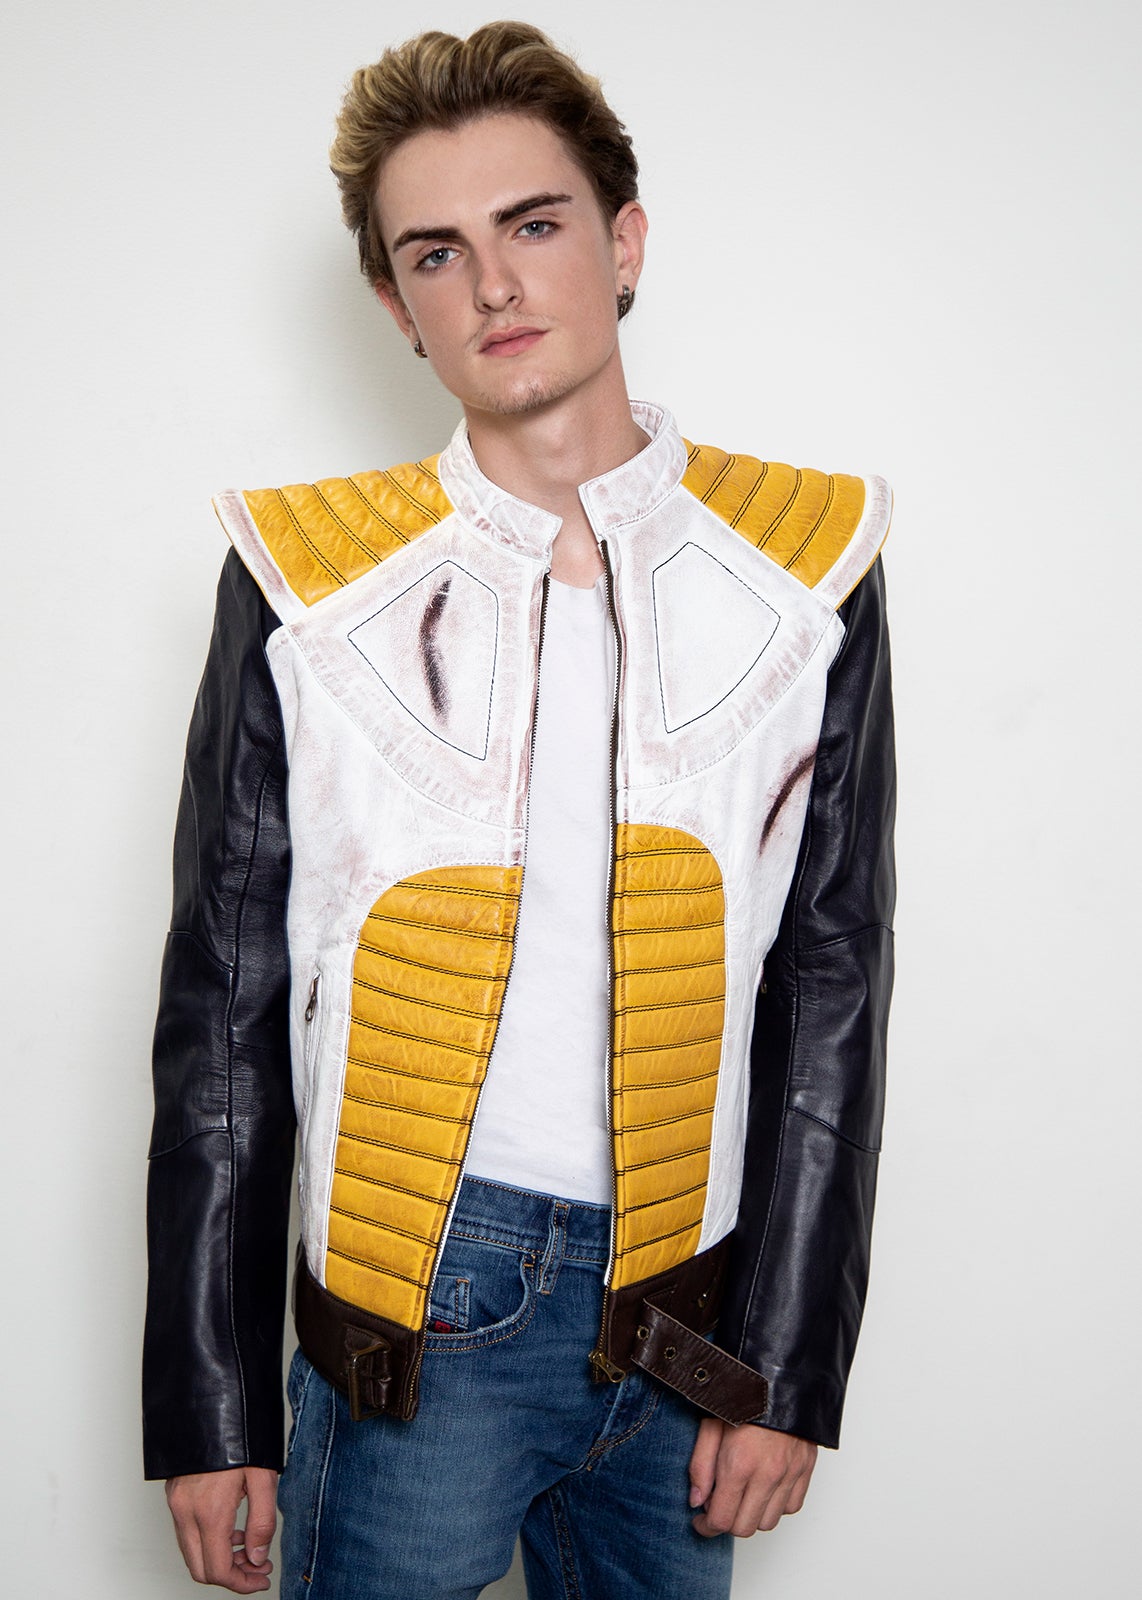 Vegeta Prince of Saiyans Dragon Ball Z Mens Faux Leather Jacket by Luca Designs